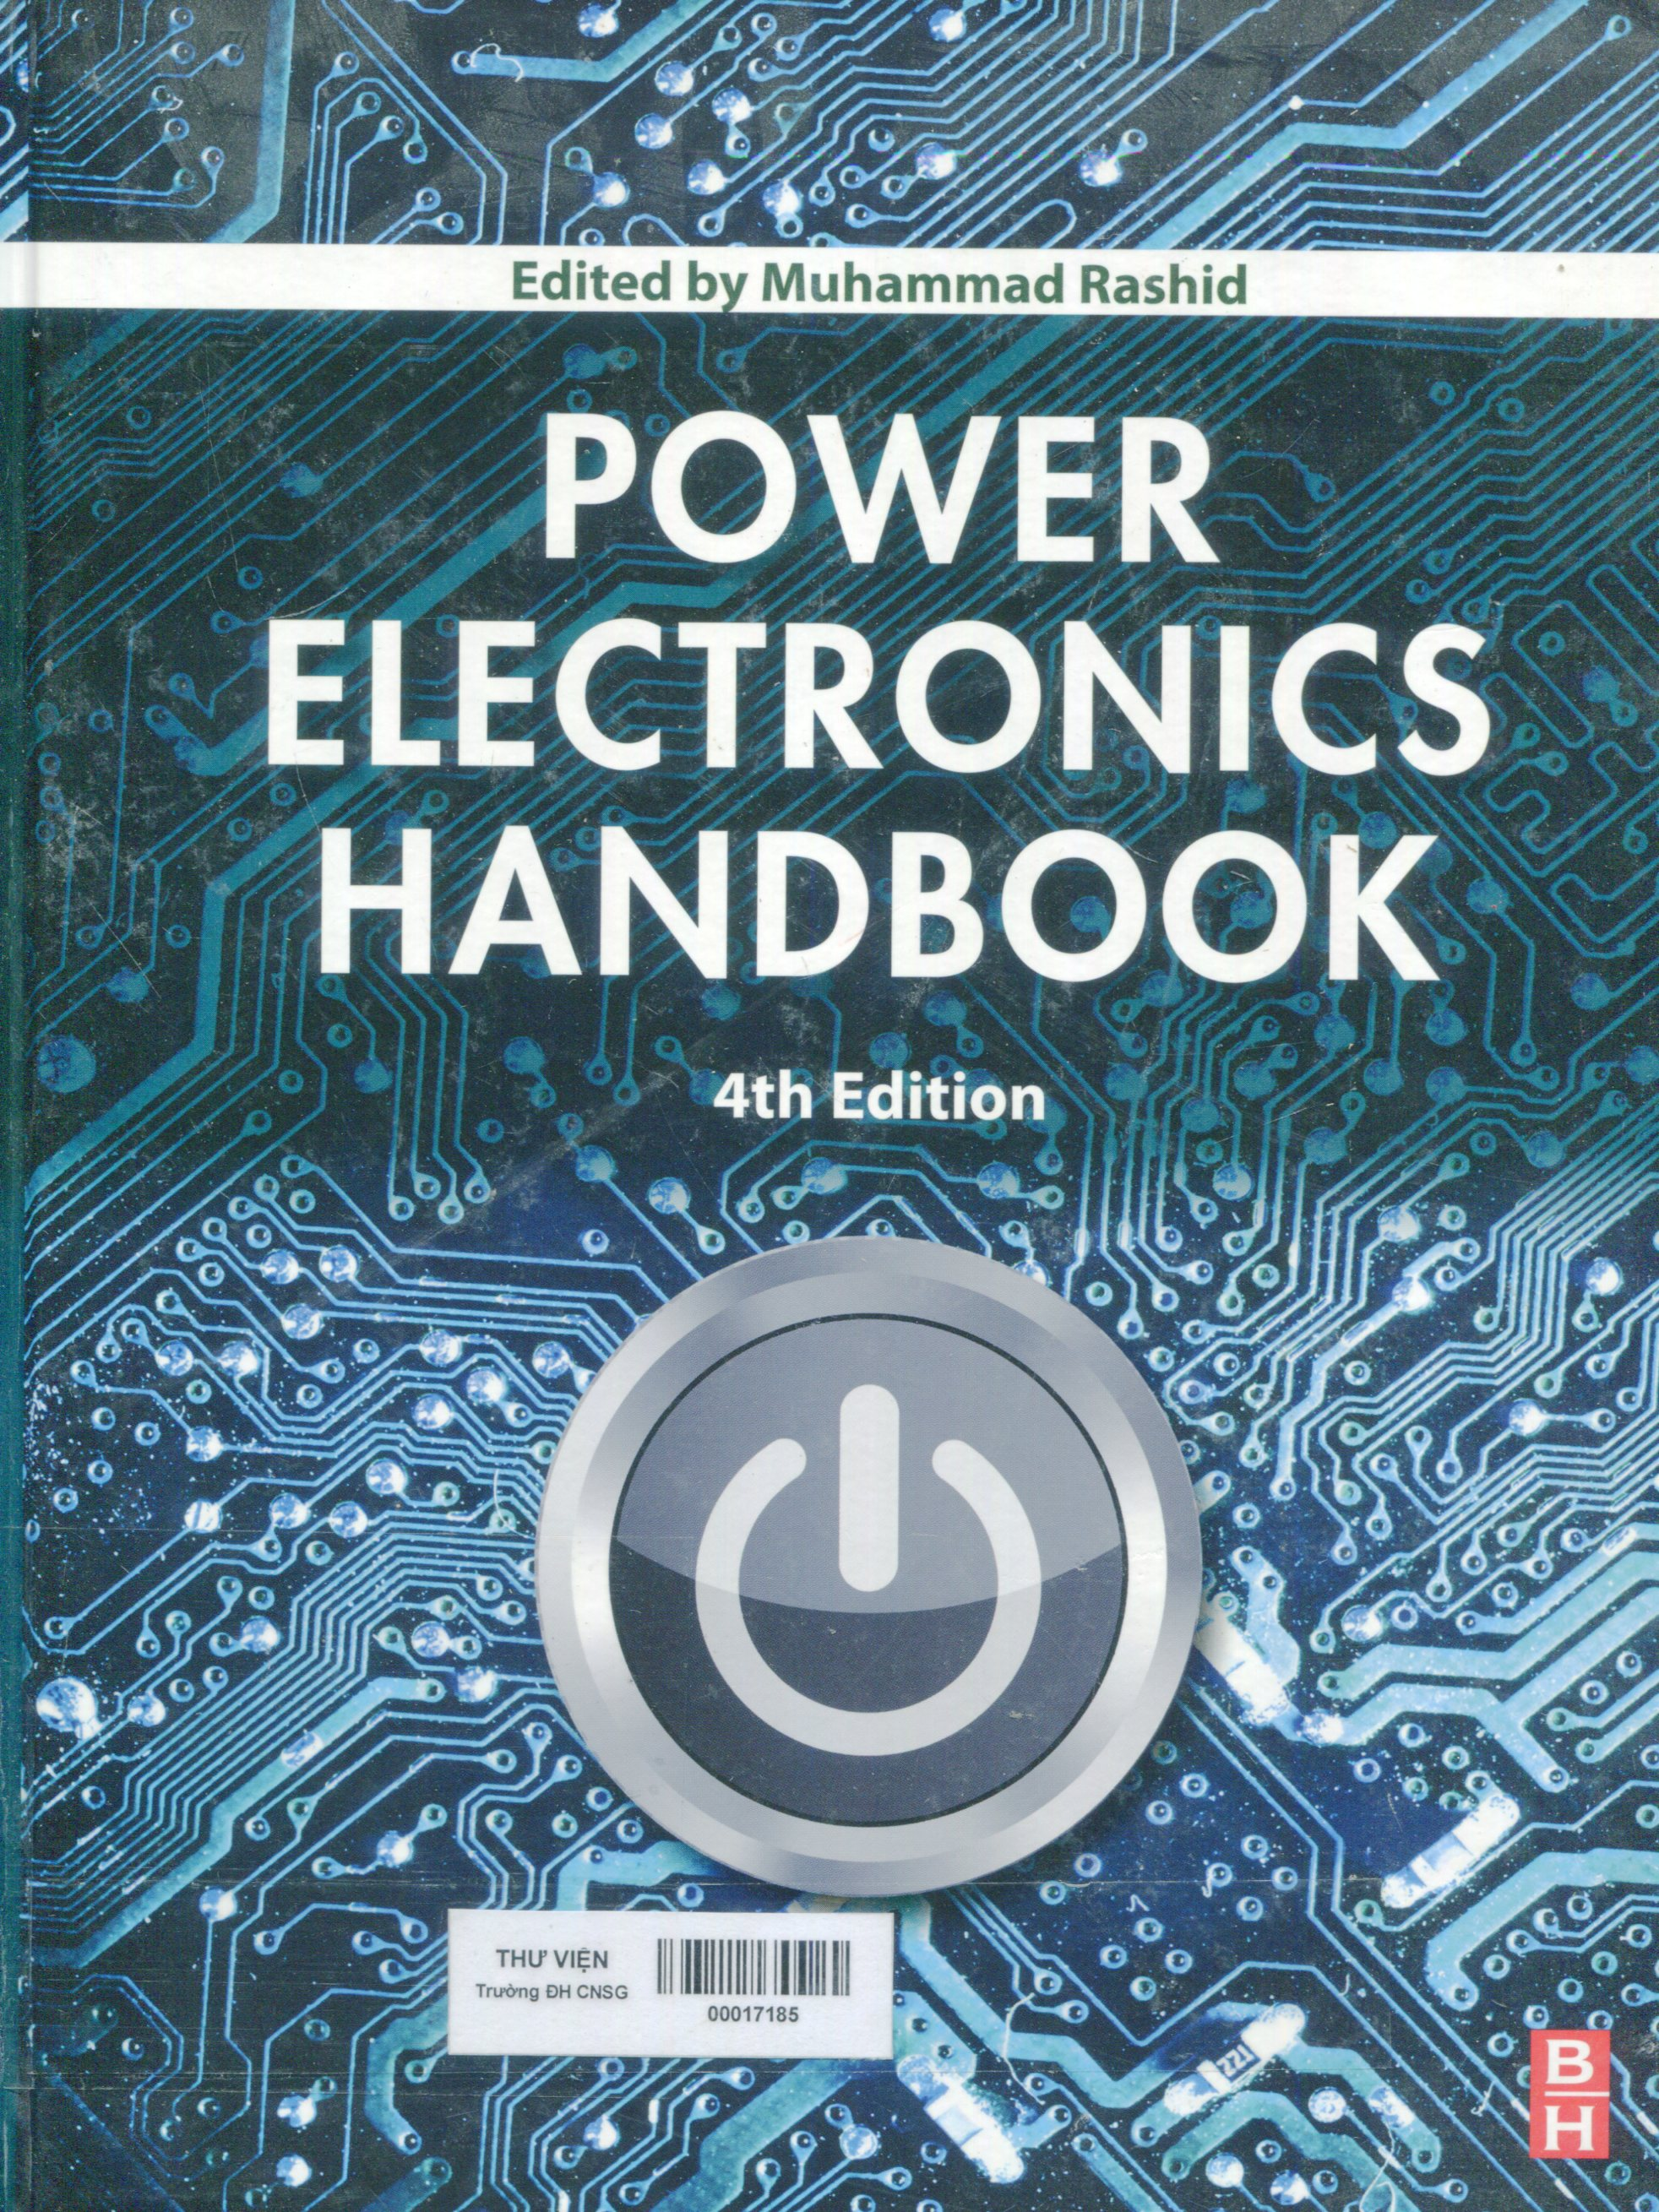 Power electronics handbook